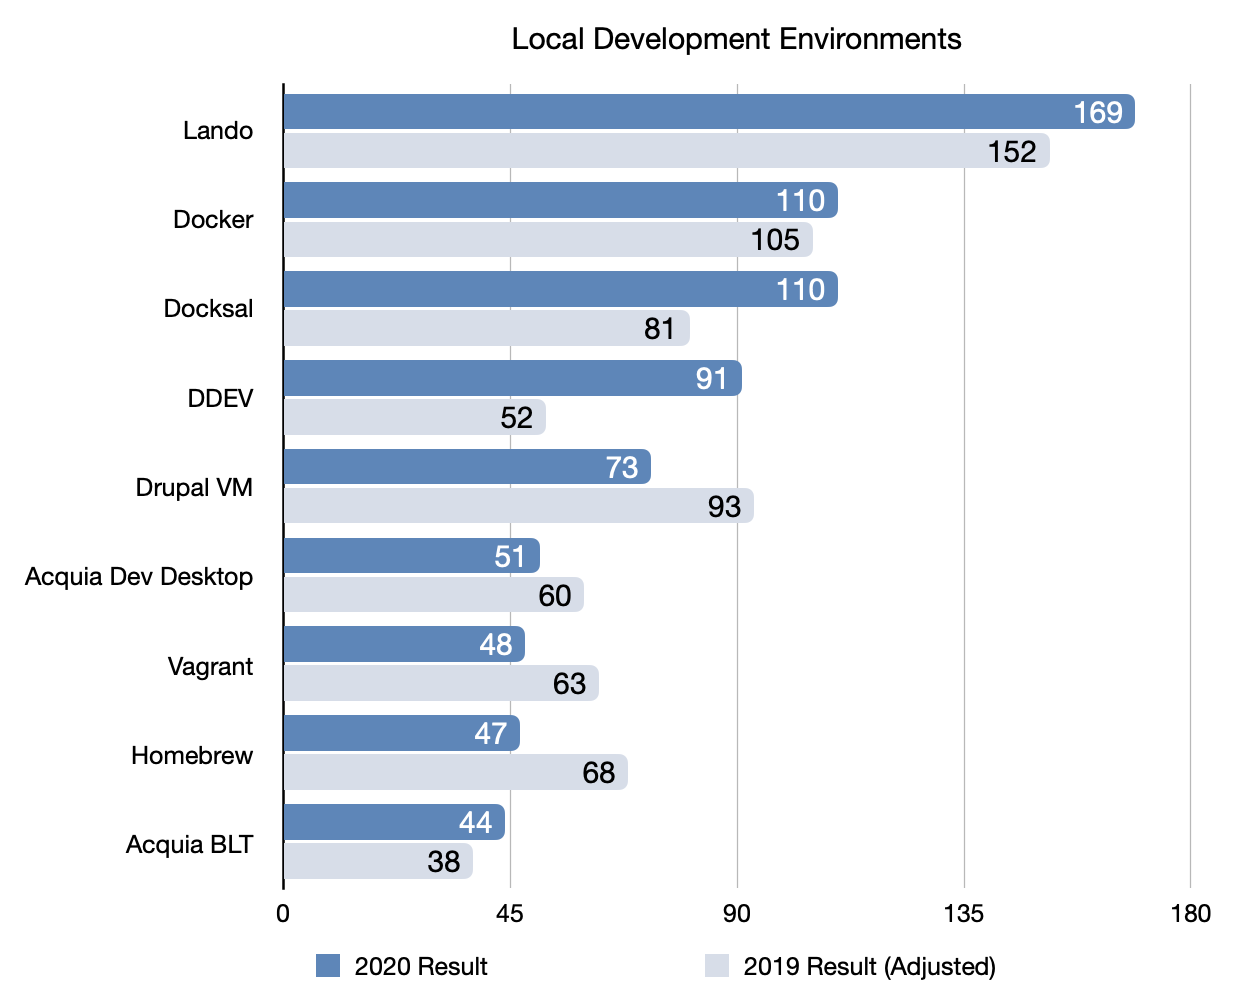 2020 Local Development Environment Results